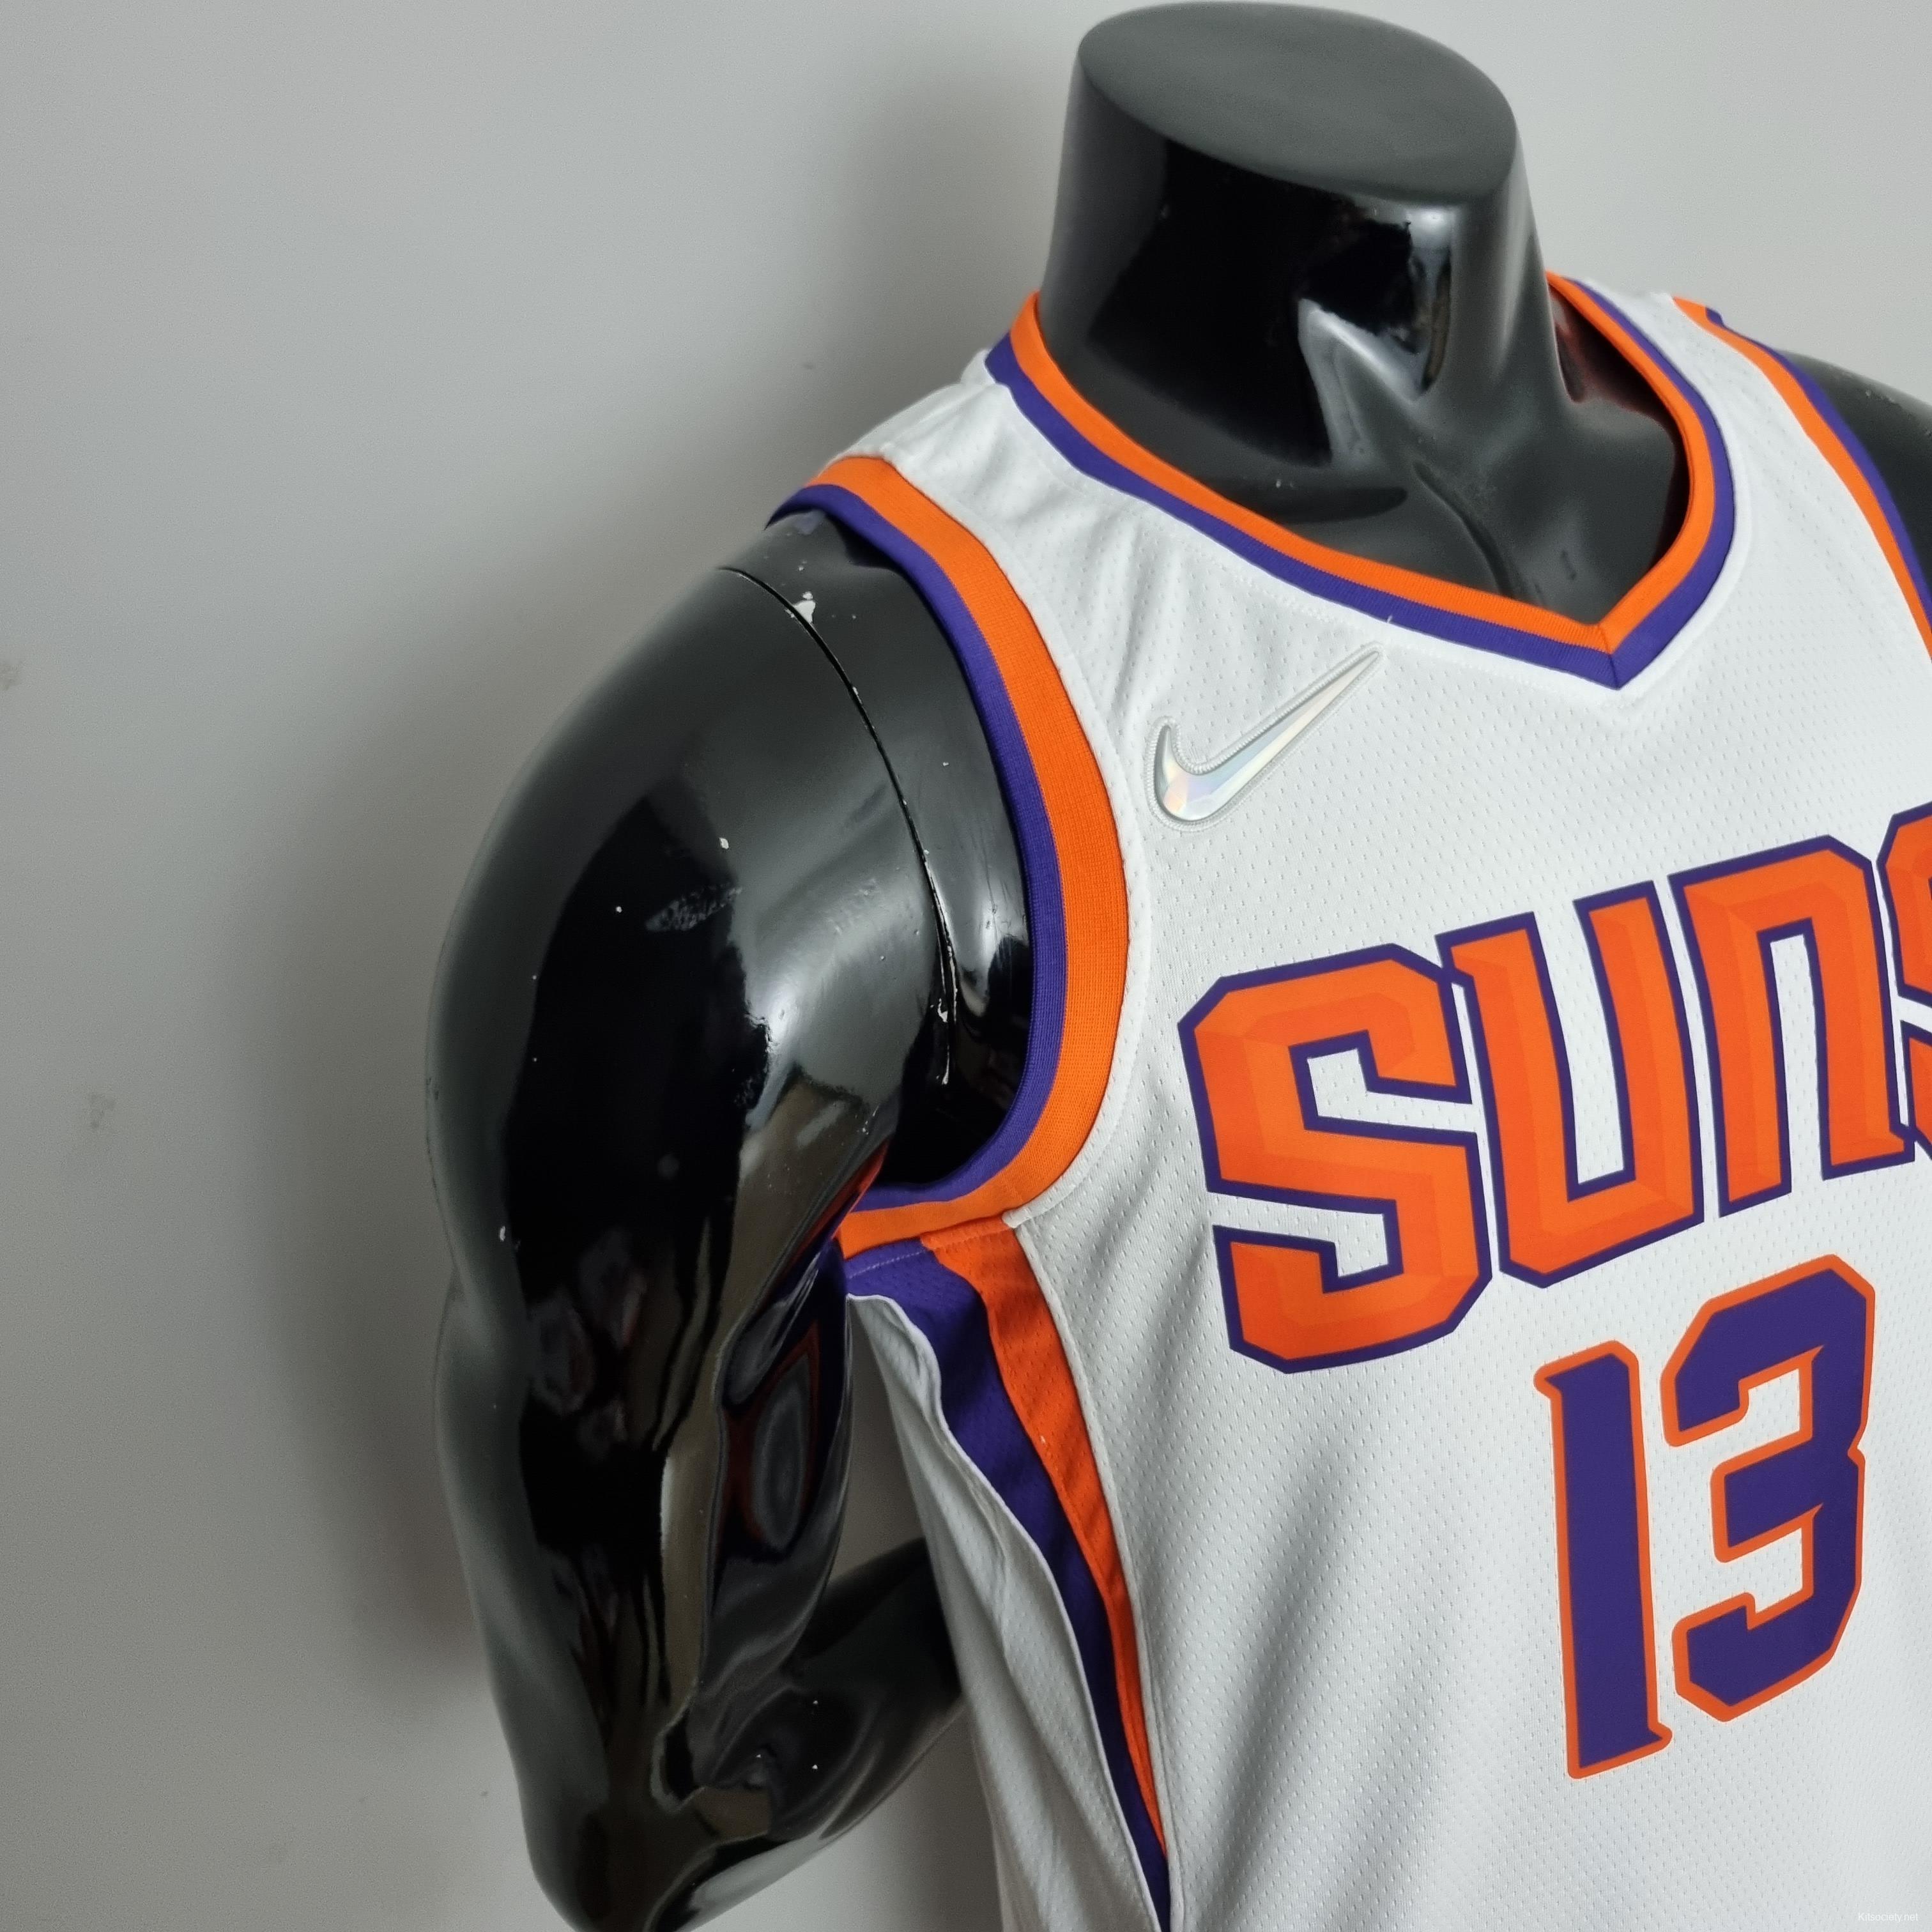 75th Anniversary Nash #13 Phoenix Suns White NBA Jersey - Kitsociety